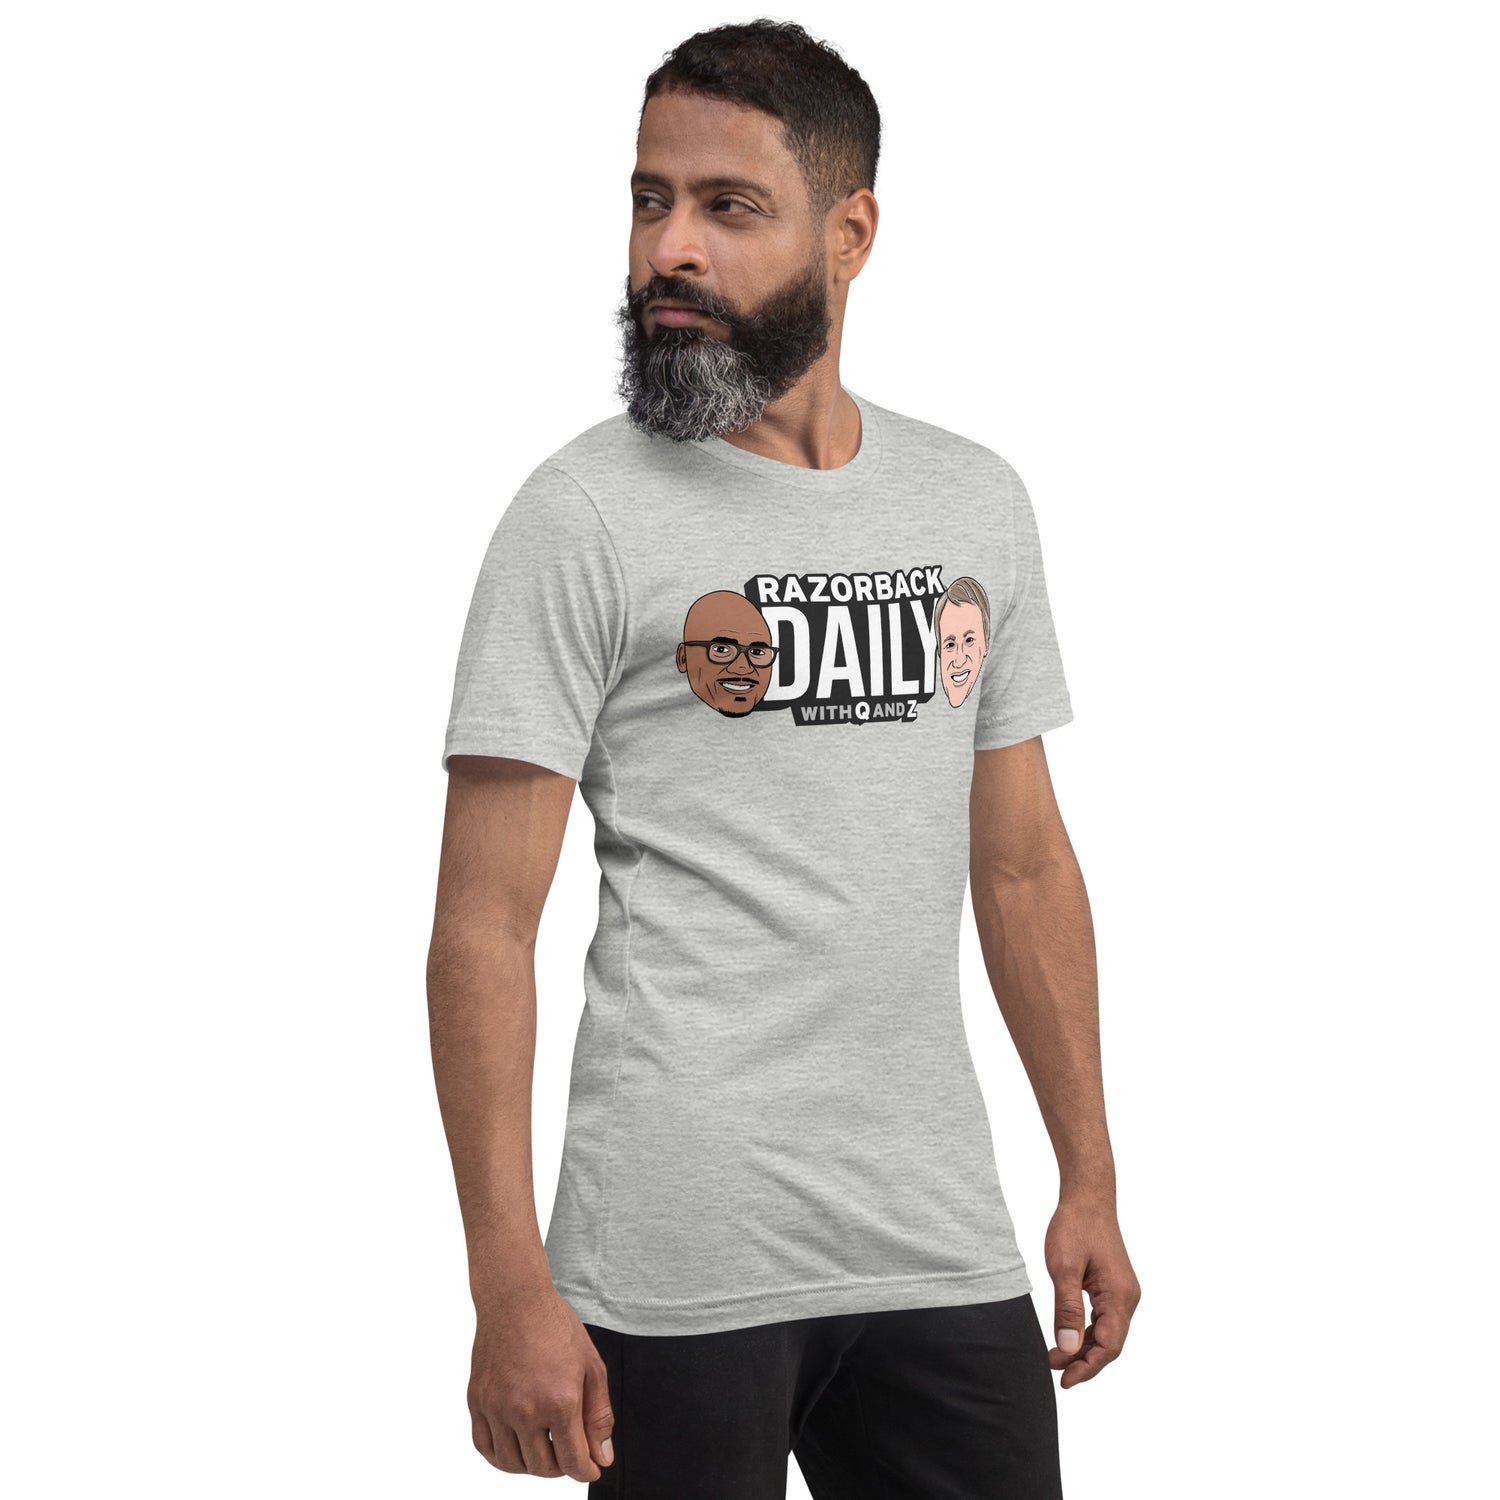 Razorback Daily T-Shirt